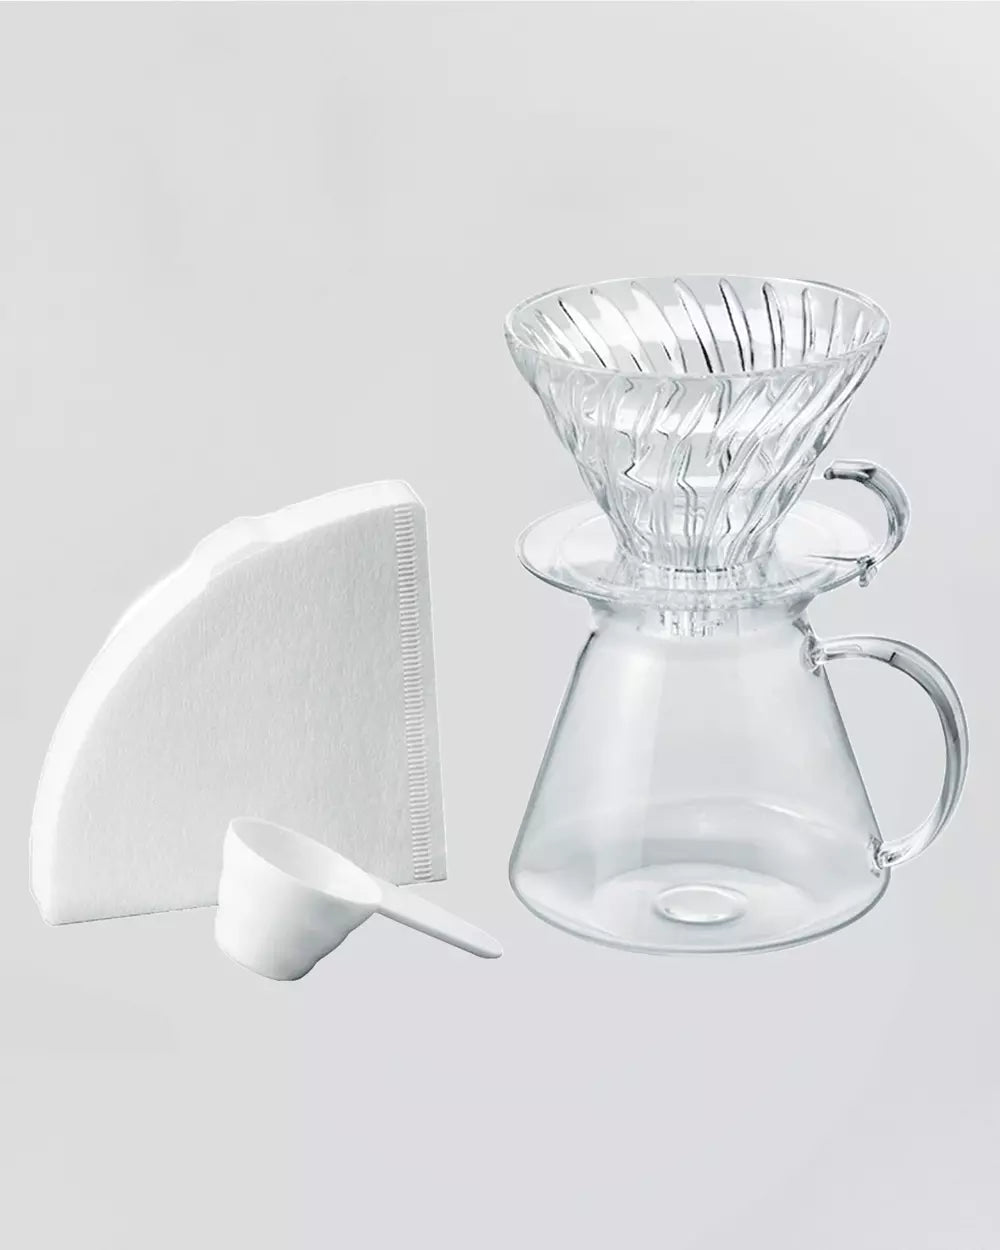 Hario Filterkaffee-Set aus Glas